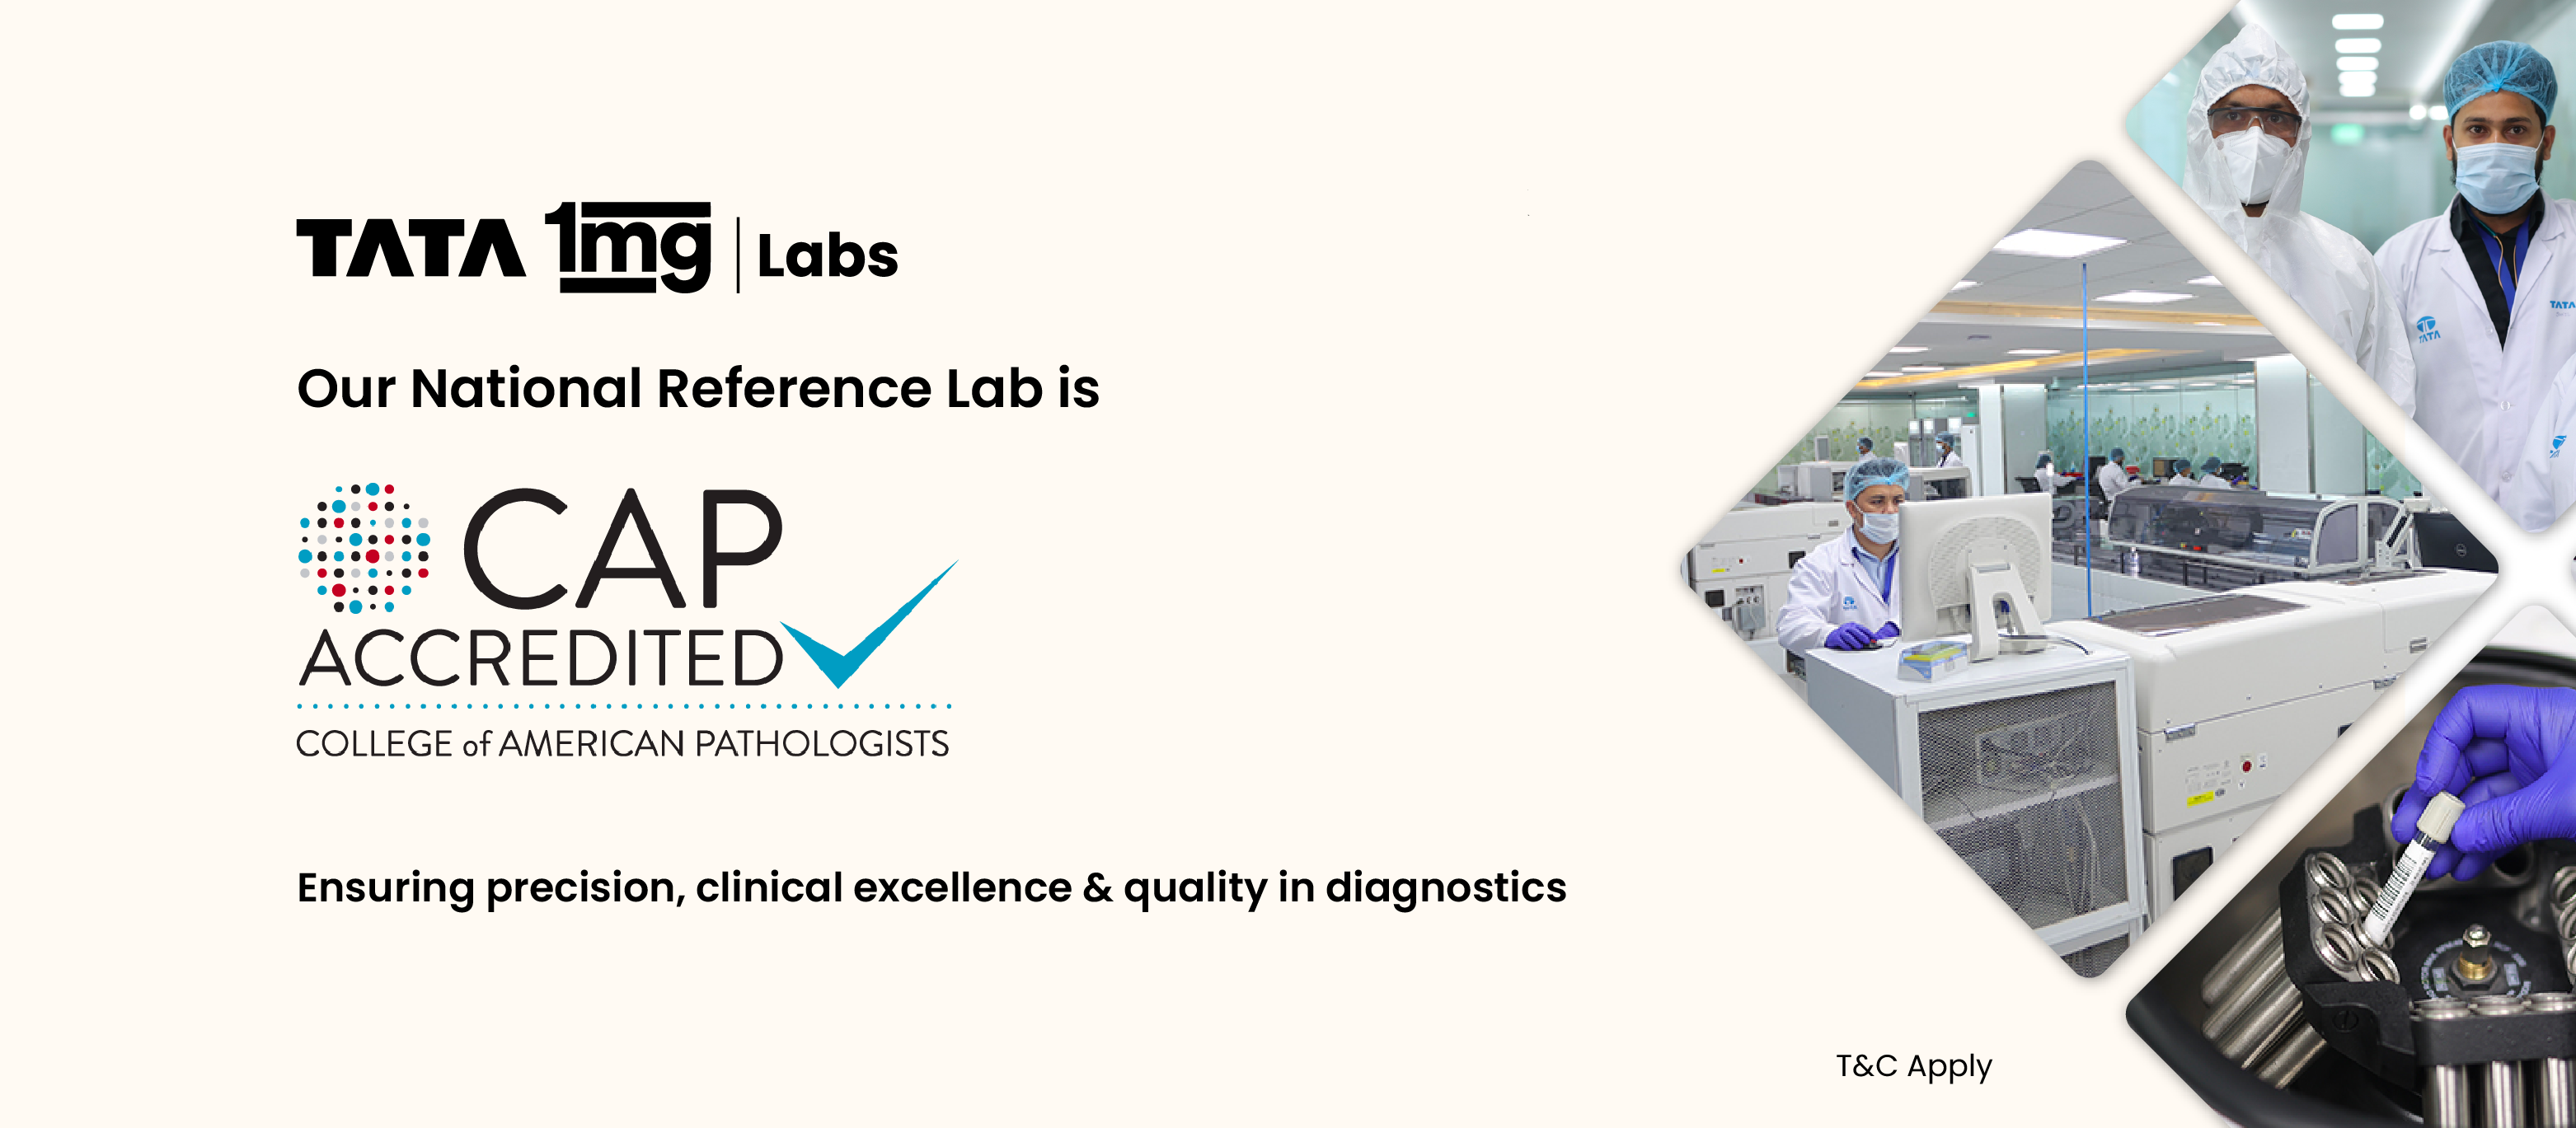 Tata 1mg Labs: The Trusted Pathology Lab 